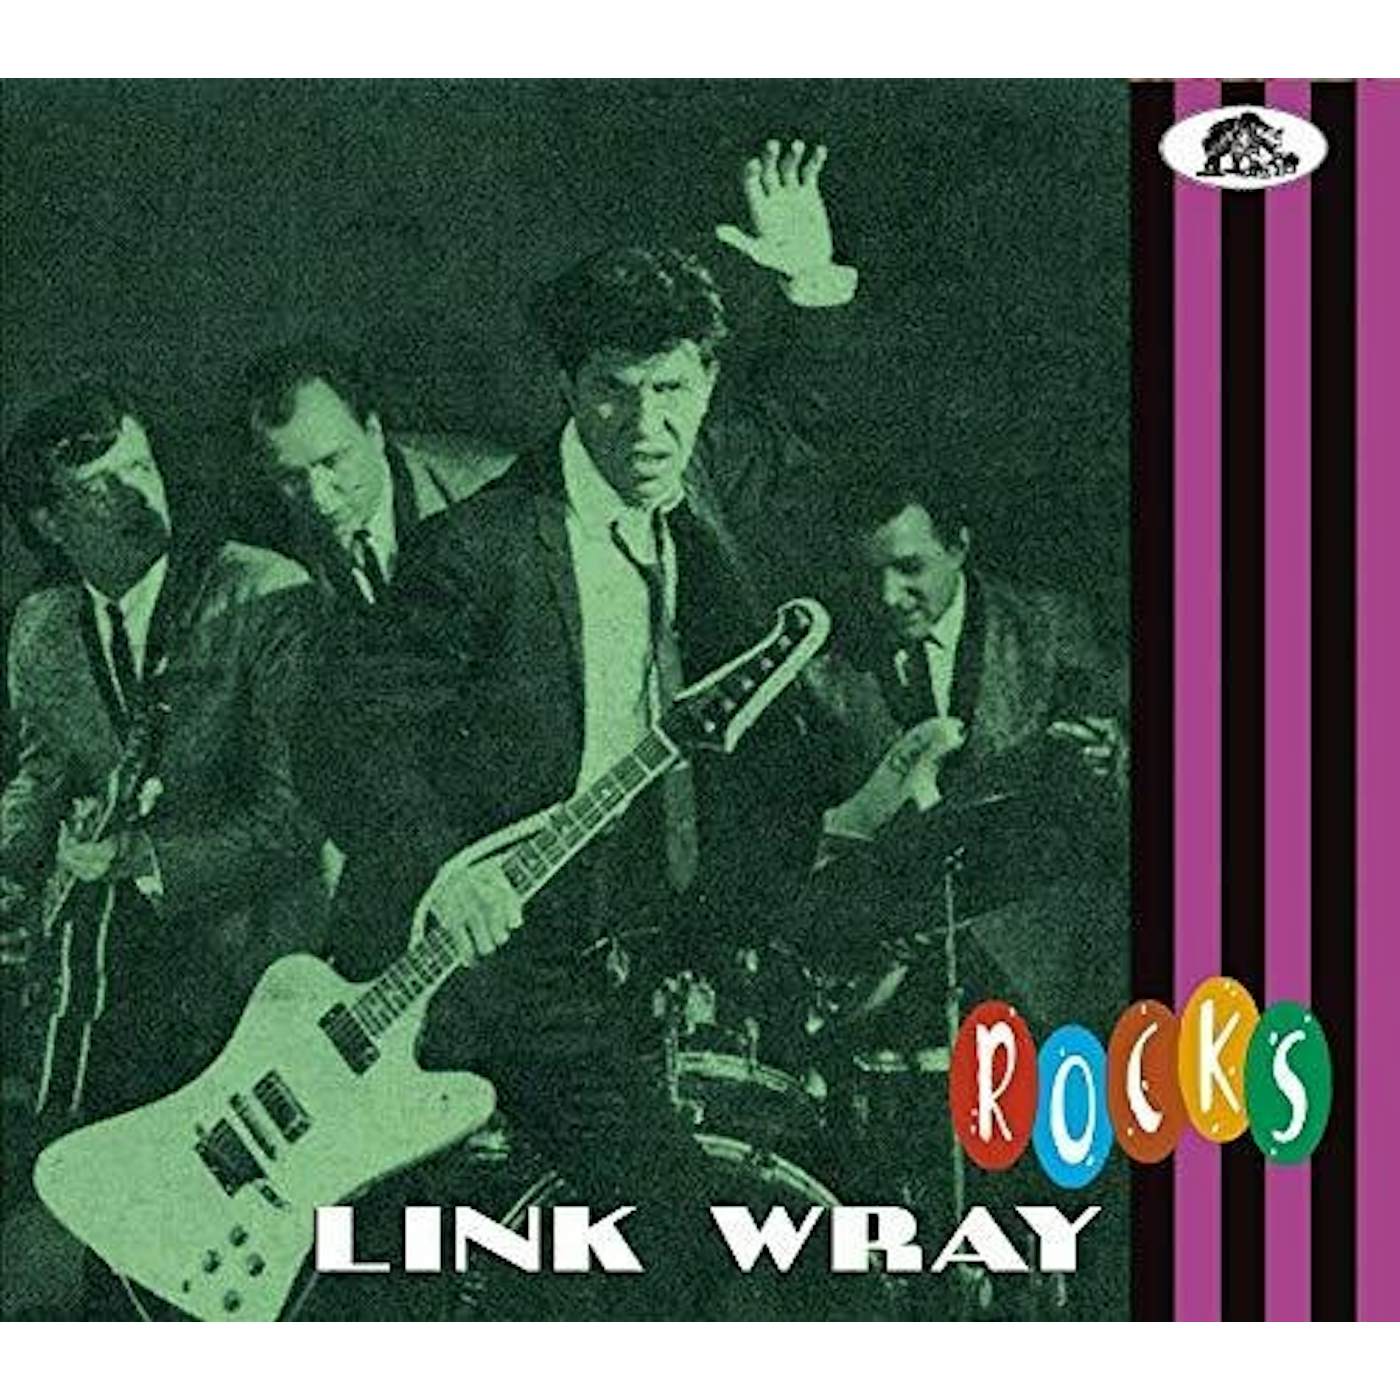 Link Wray ROCKS CD